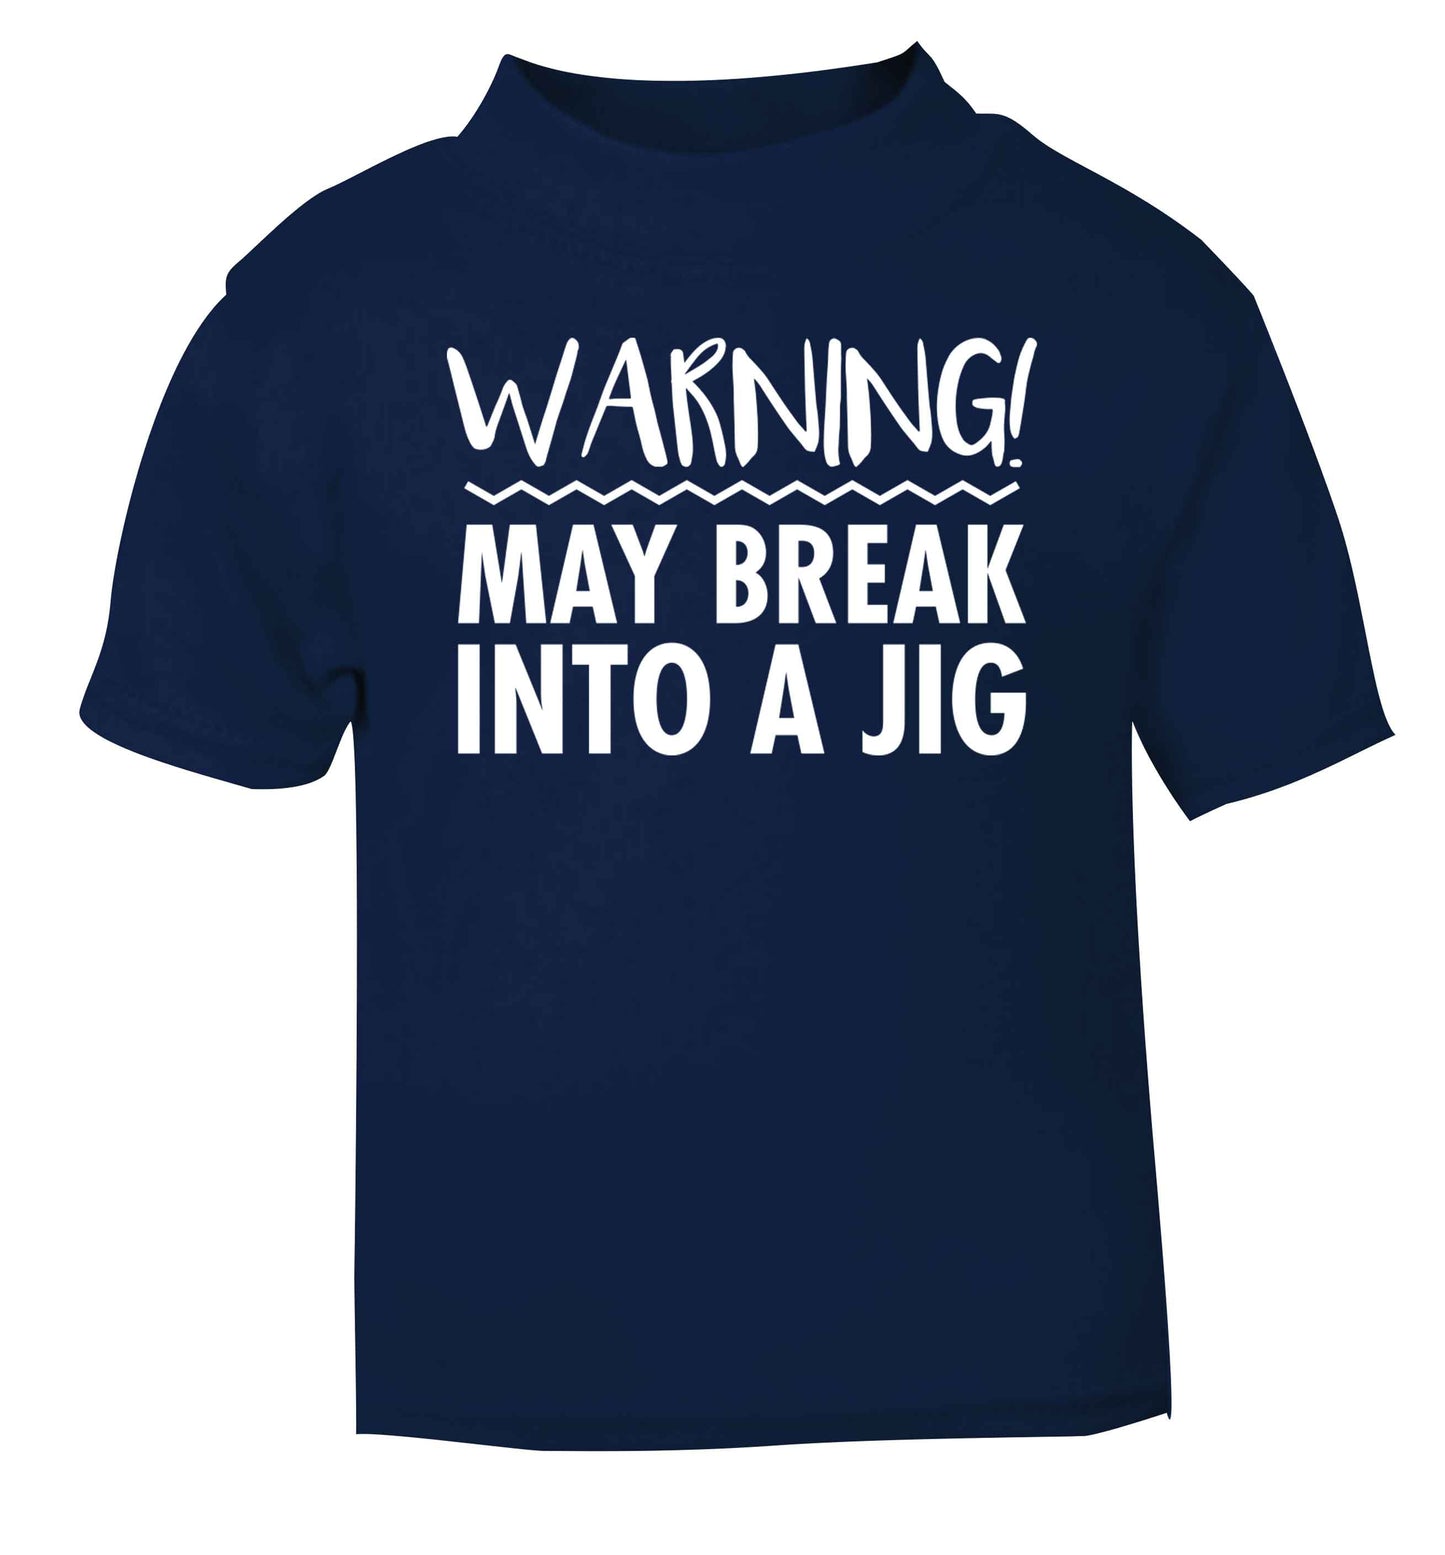 Warning may break into a jig navy baby toddler Tshirt 2 Years